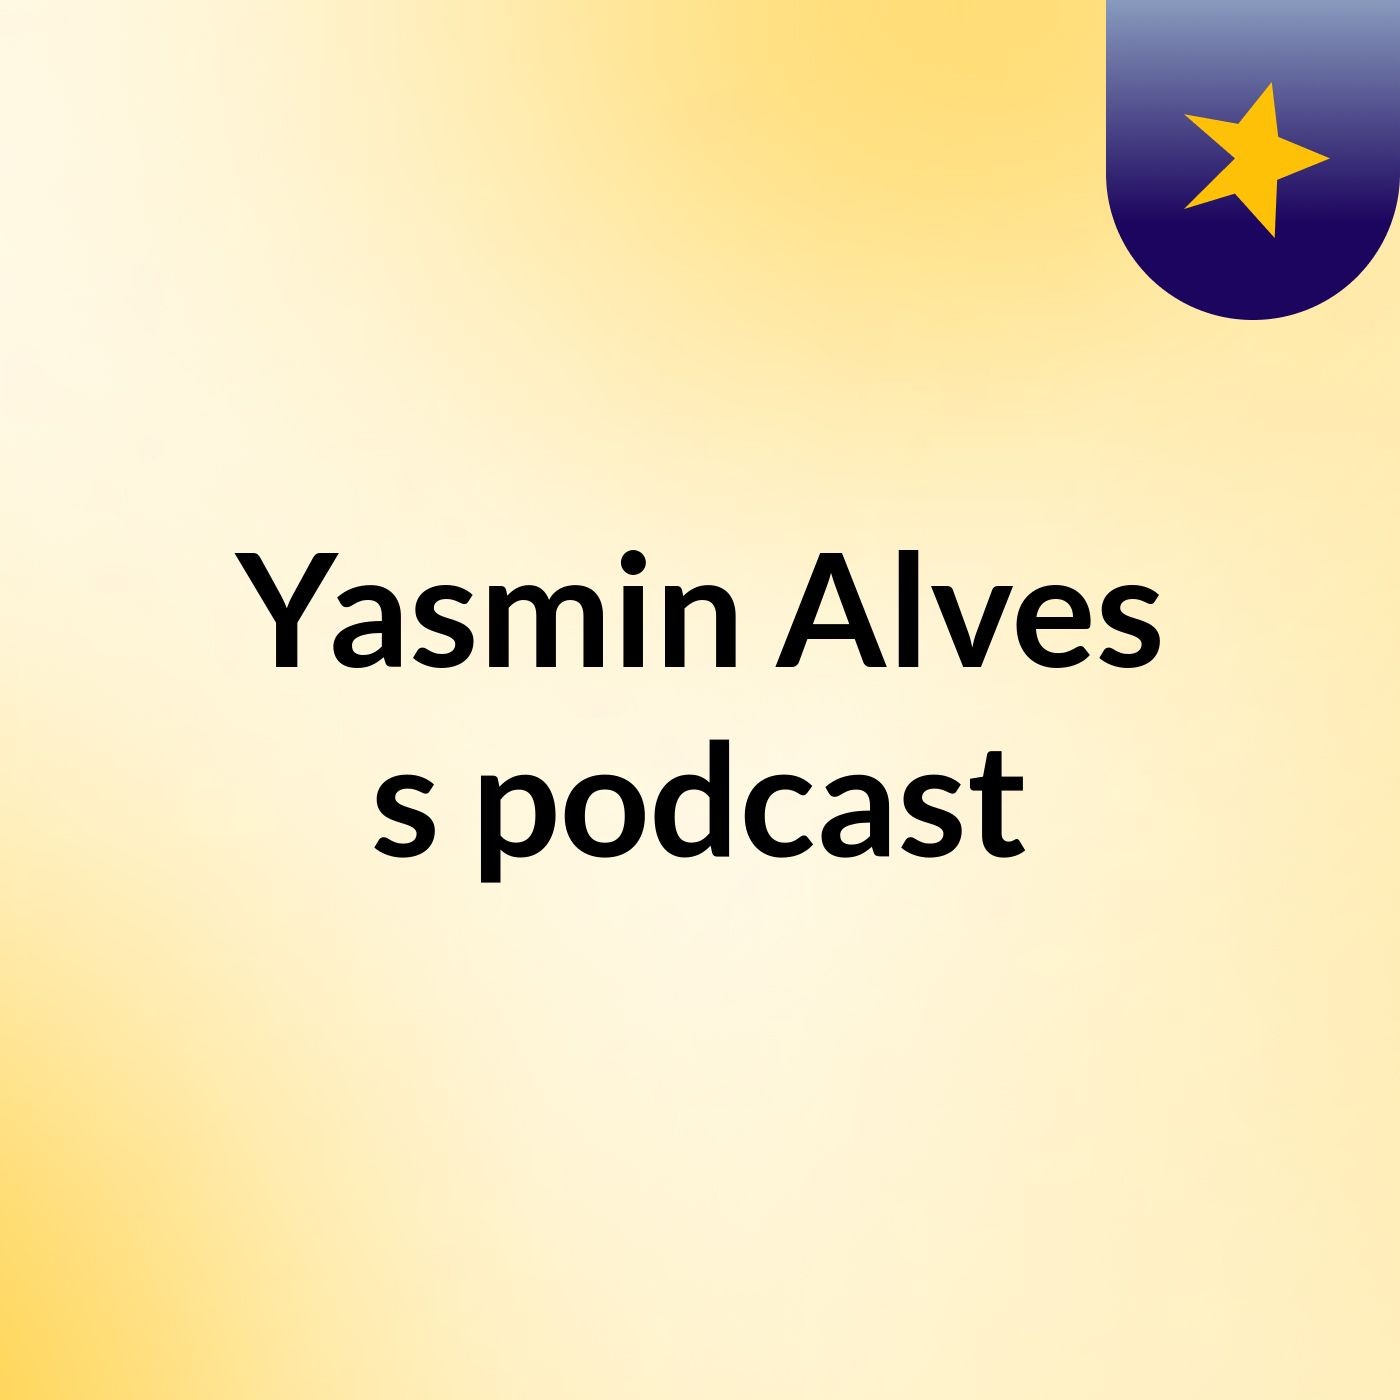 Yasmin Alves's podcast